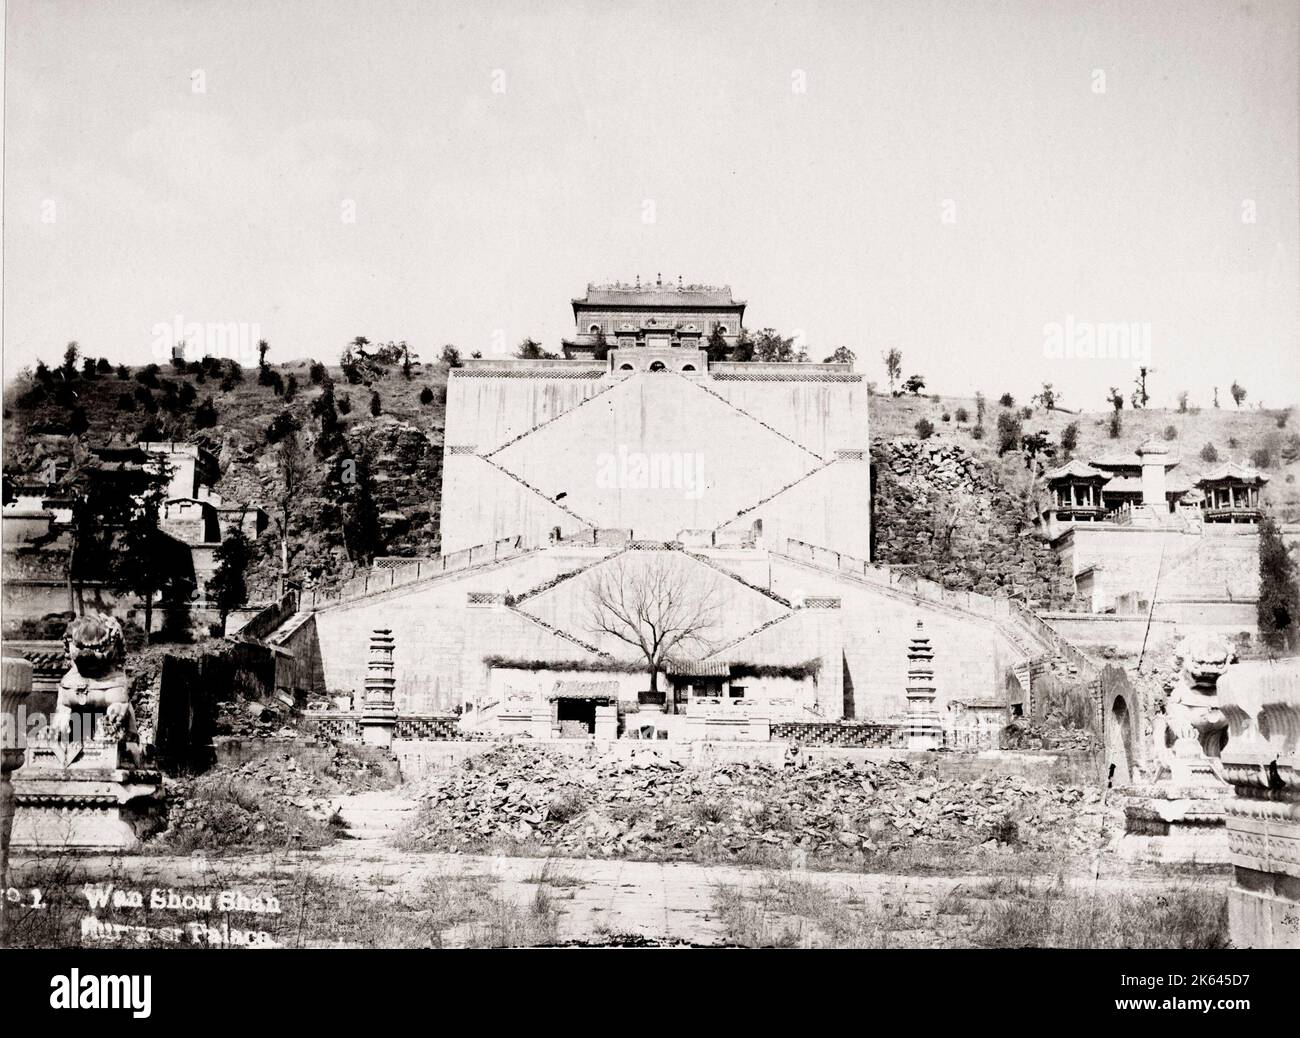 Fotografia d'epoca del XIX secolo: Palazzo d'estate, WAN Shou shan, Longevity Hill, Pechino Pechino Pechino, Cina. Foto di Thomas Child. Foto Stock